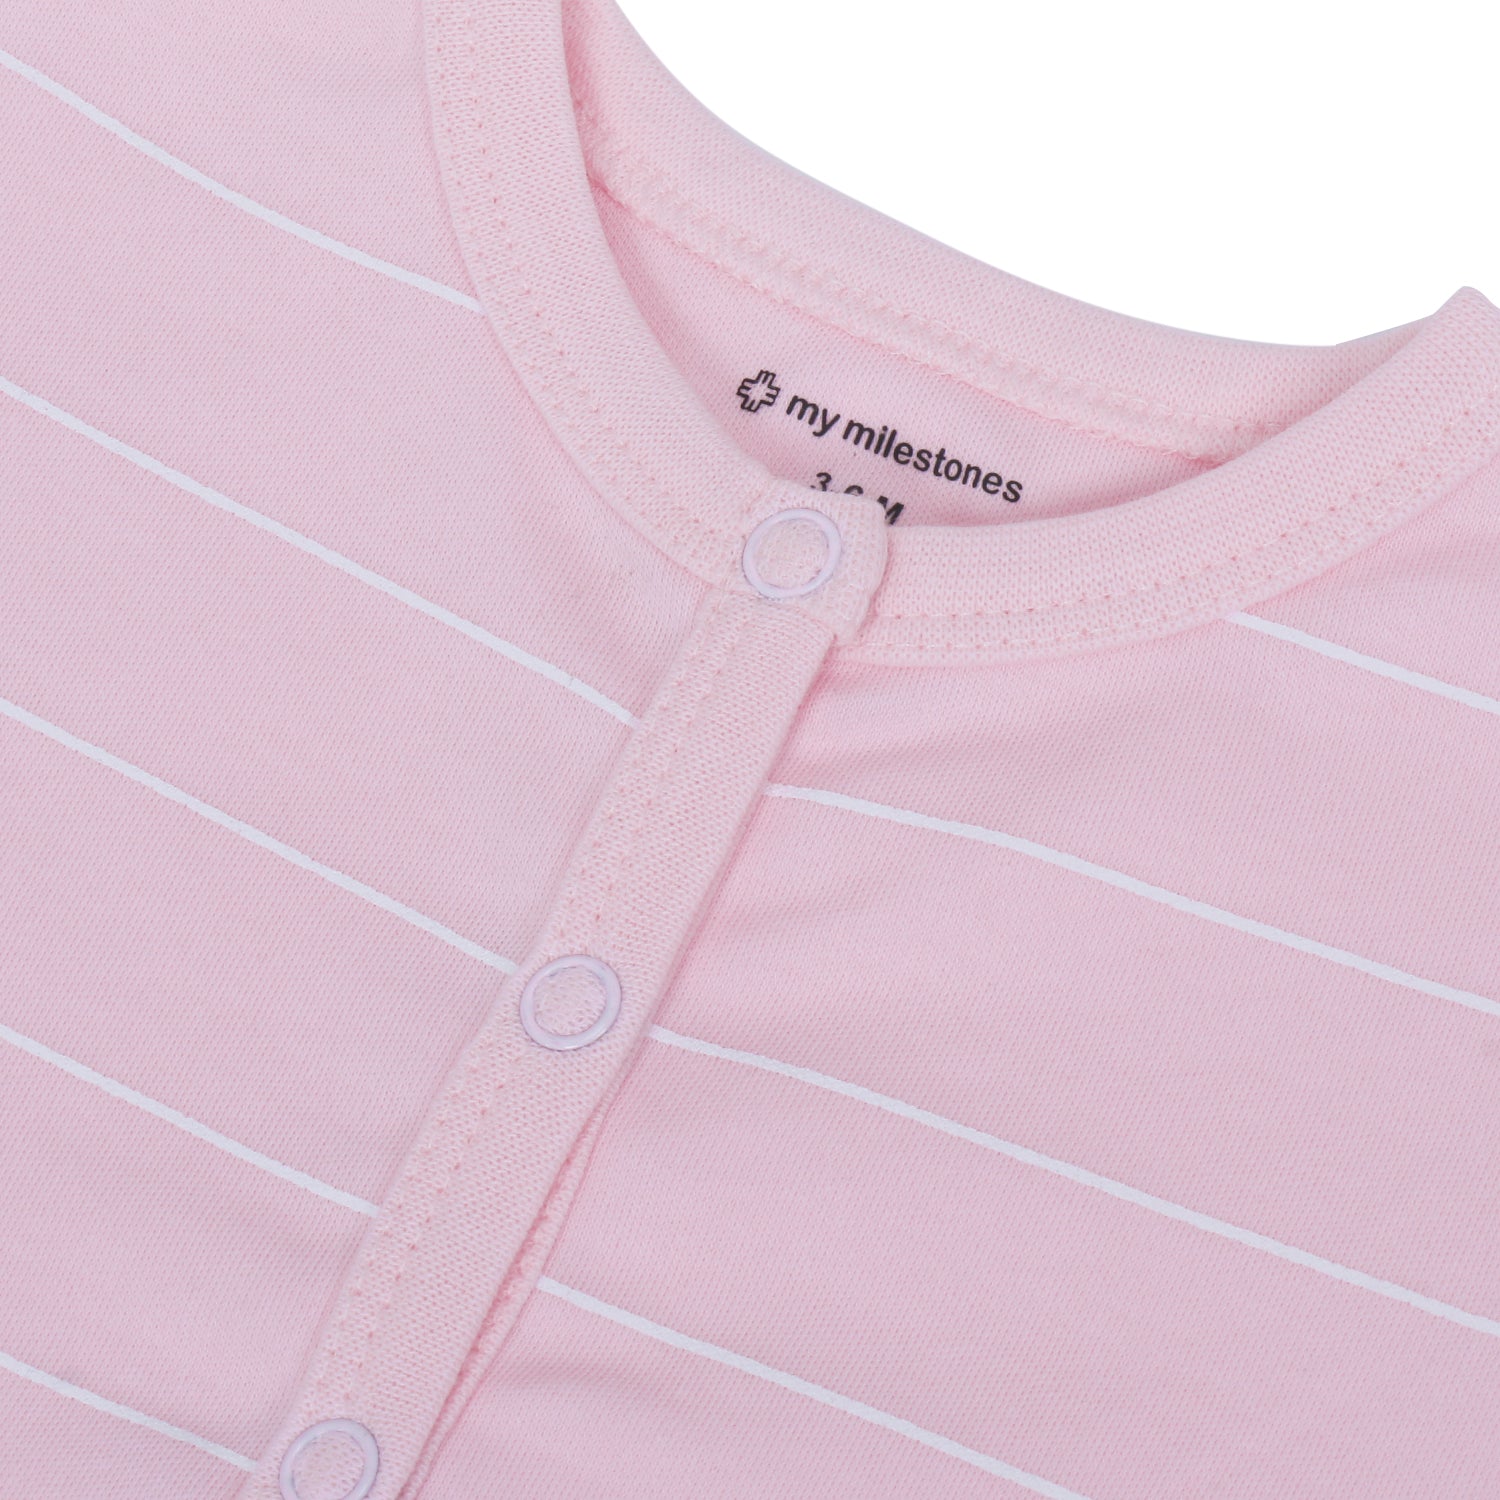 My Milestones T-shirt Half Sleeves Girls Navy Blue Stars /Pink Stripes - 2Pc Pack